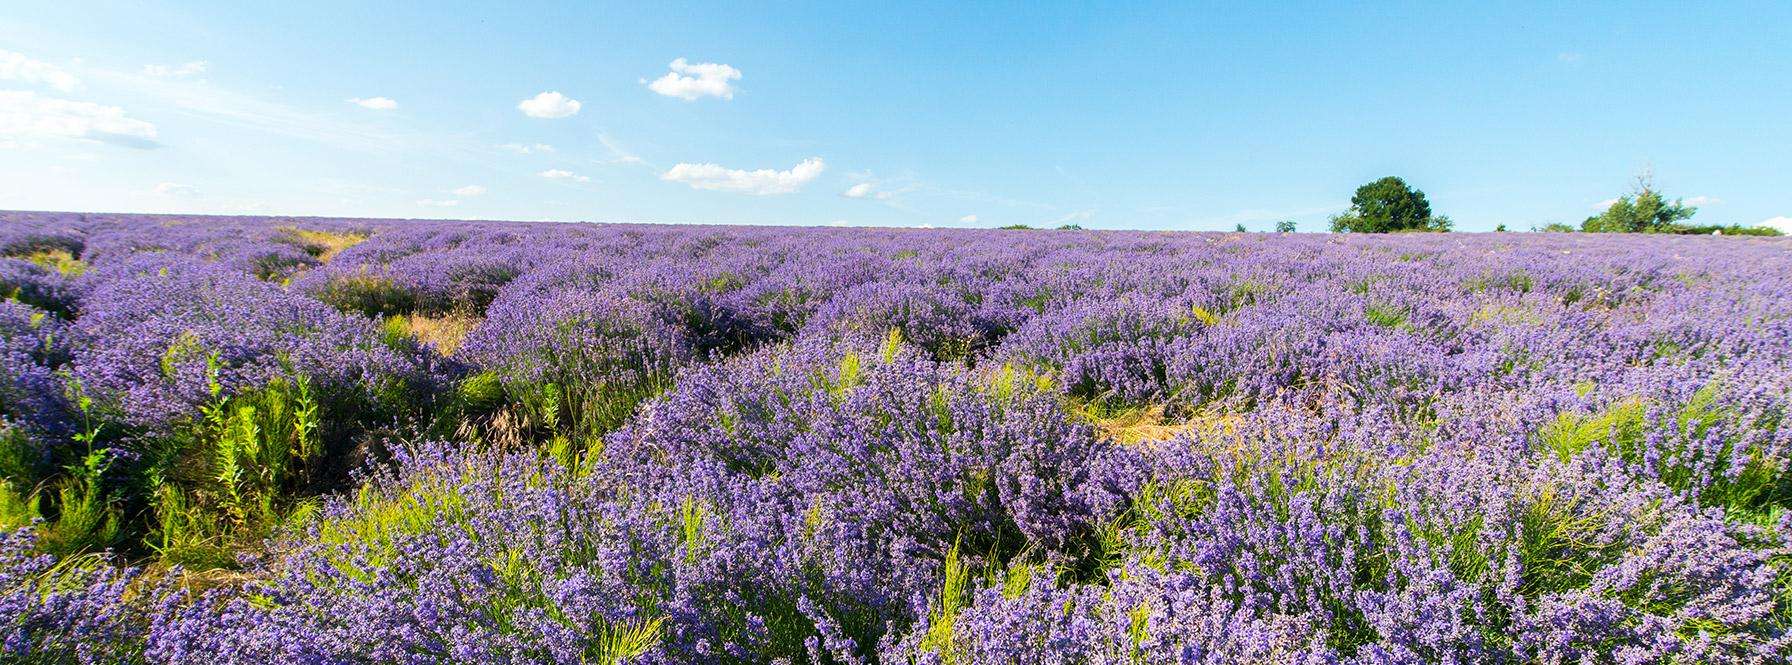 Lavender Field in Moldova